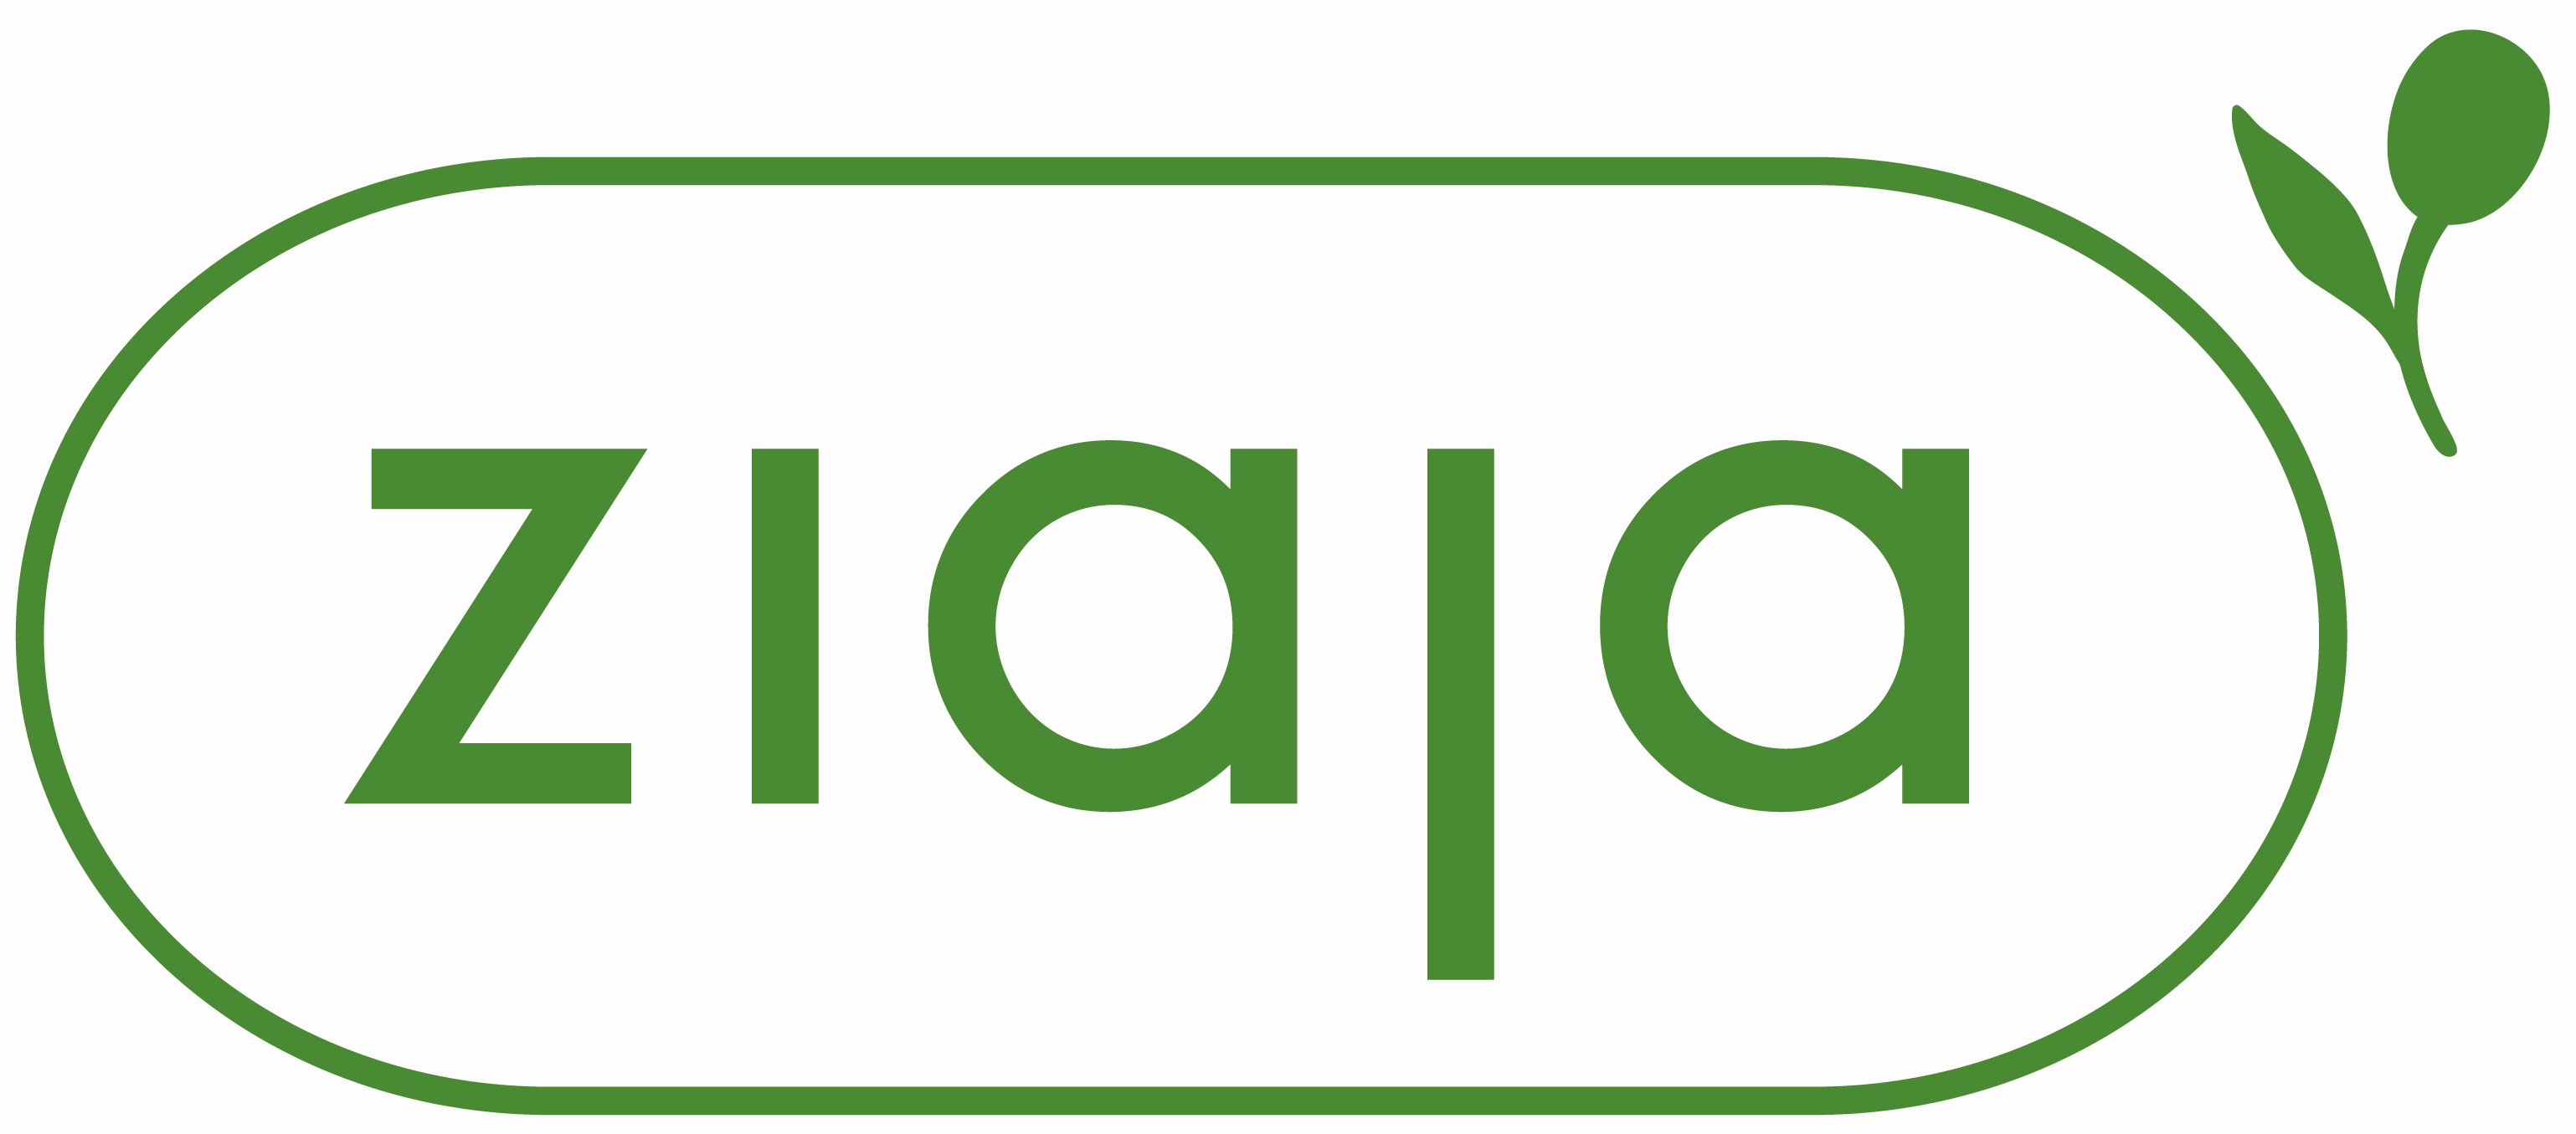 oliwka-logo_2017-standard-01